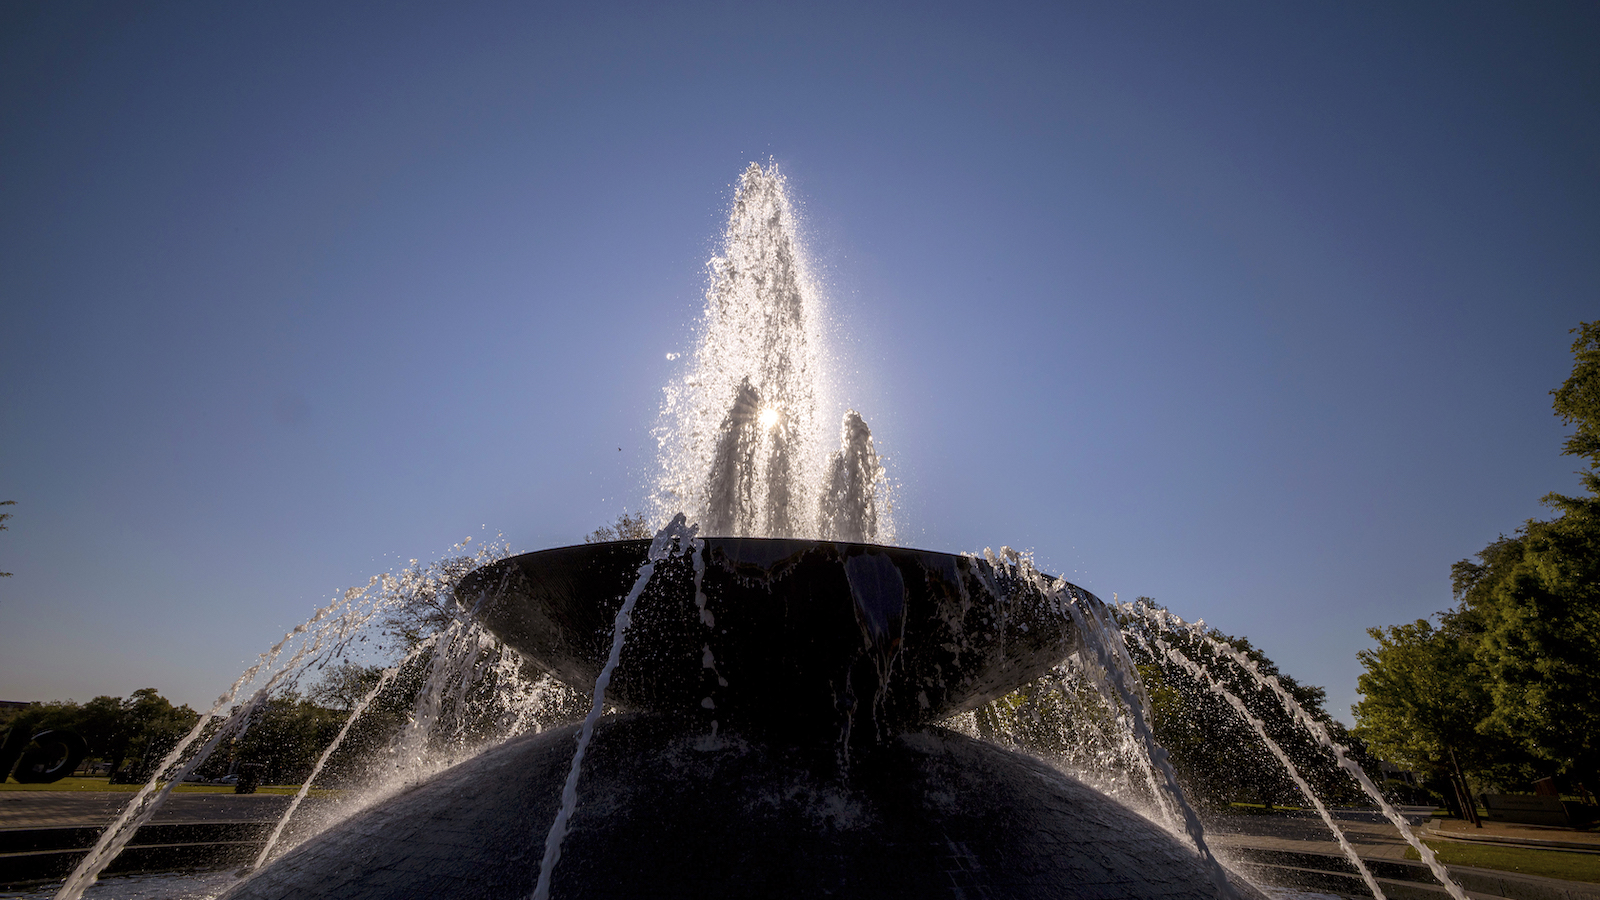 Rosenbaum Fountain 